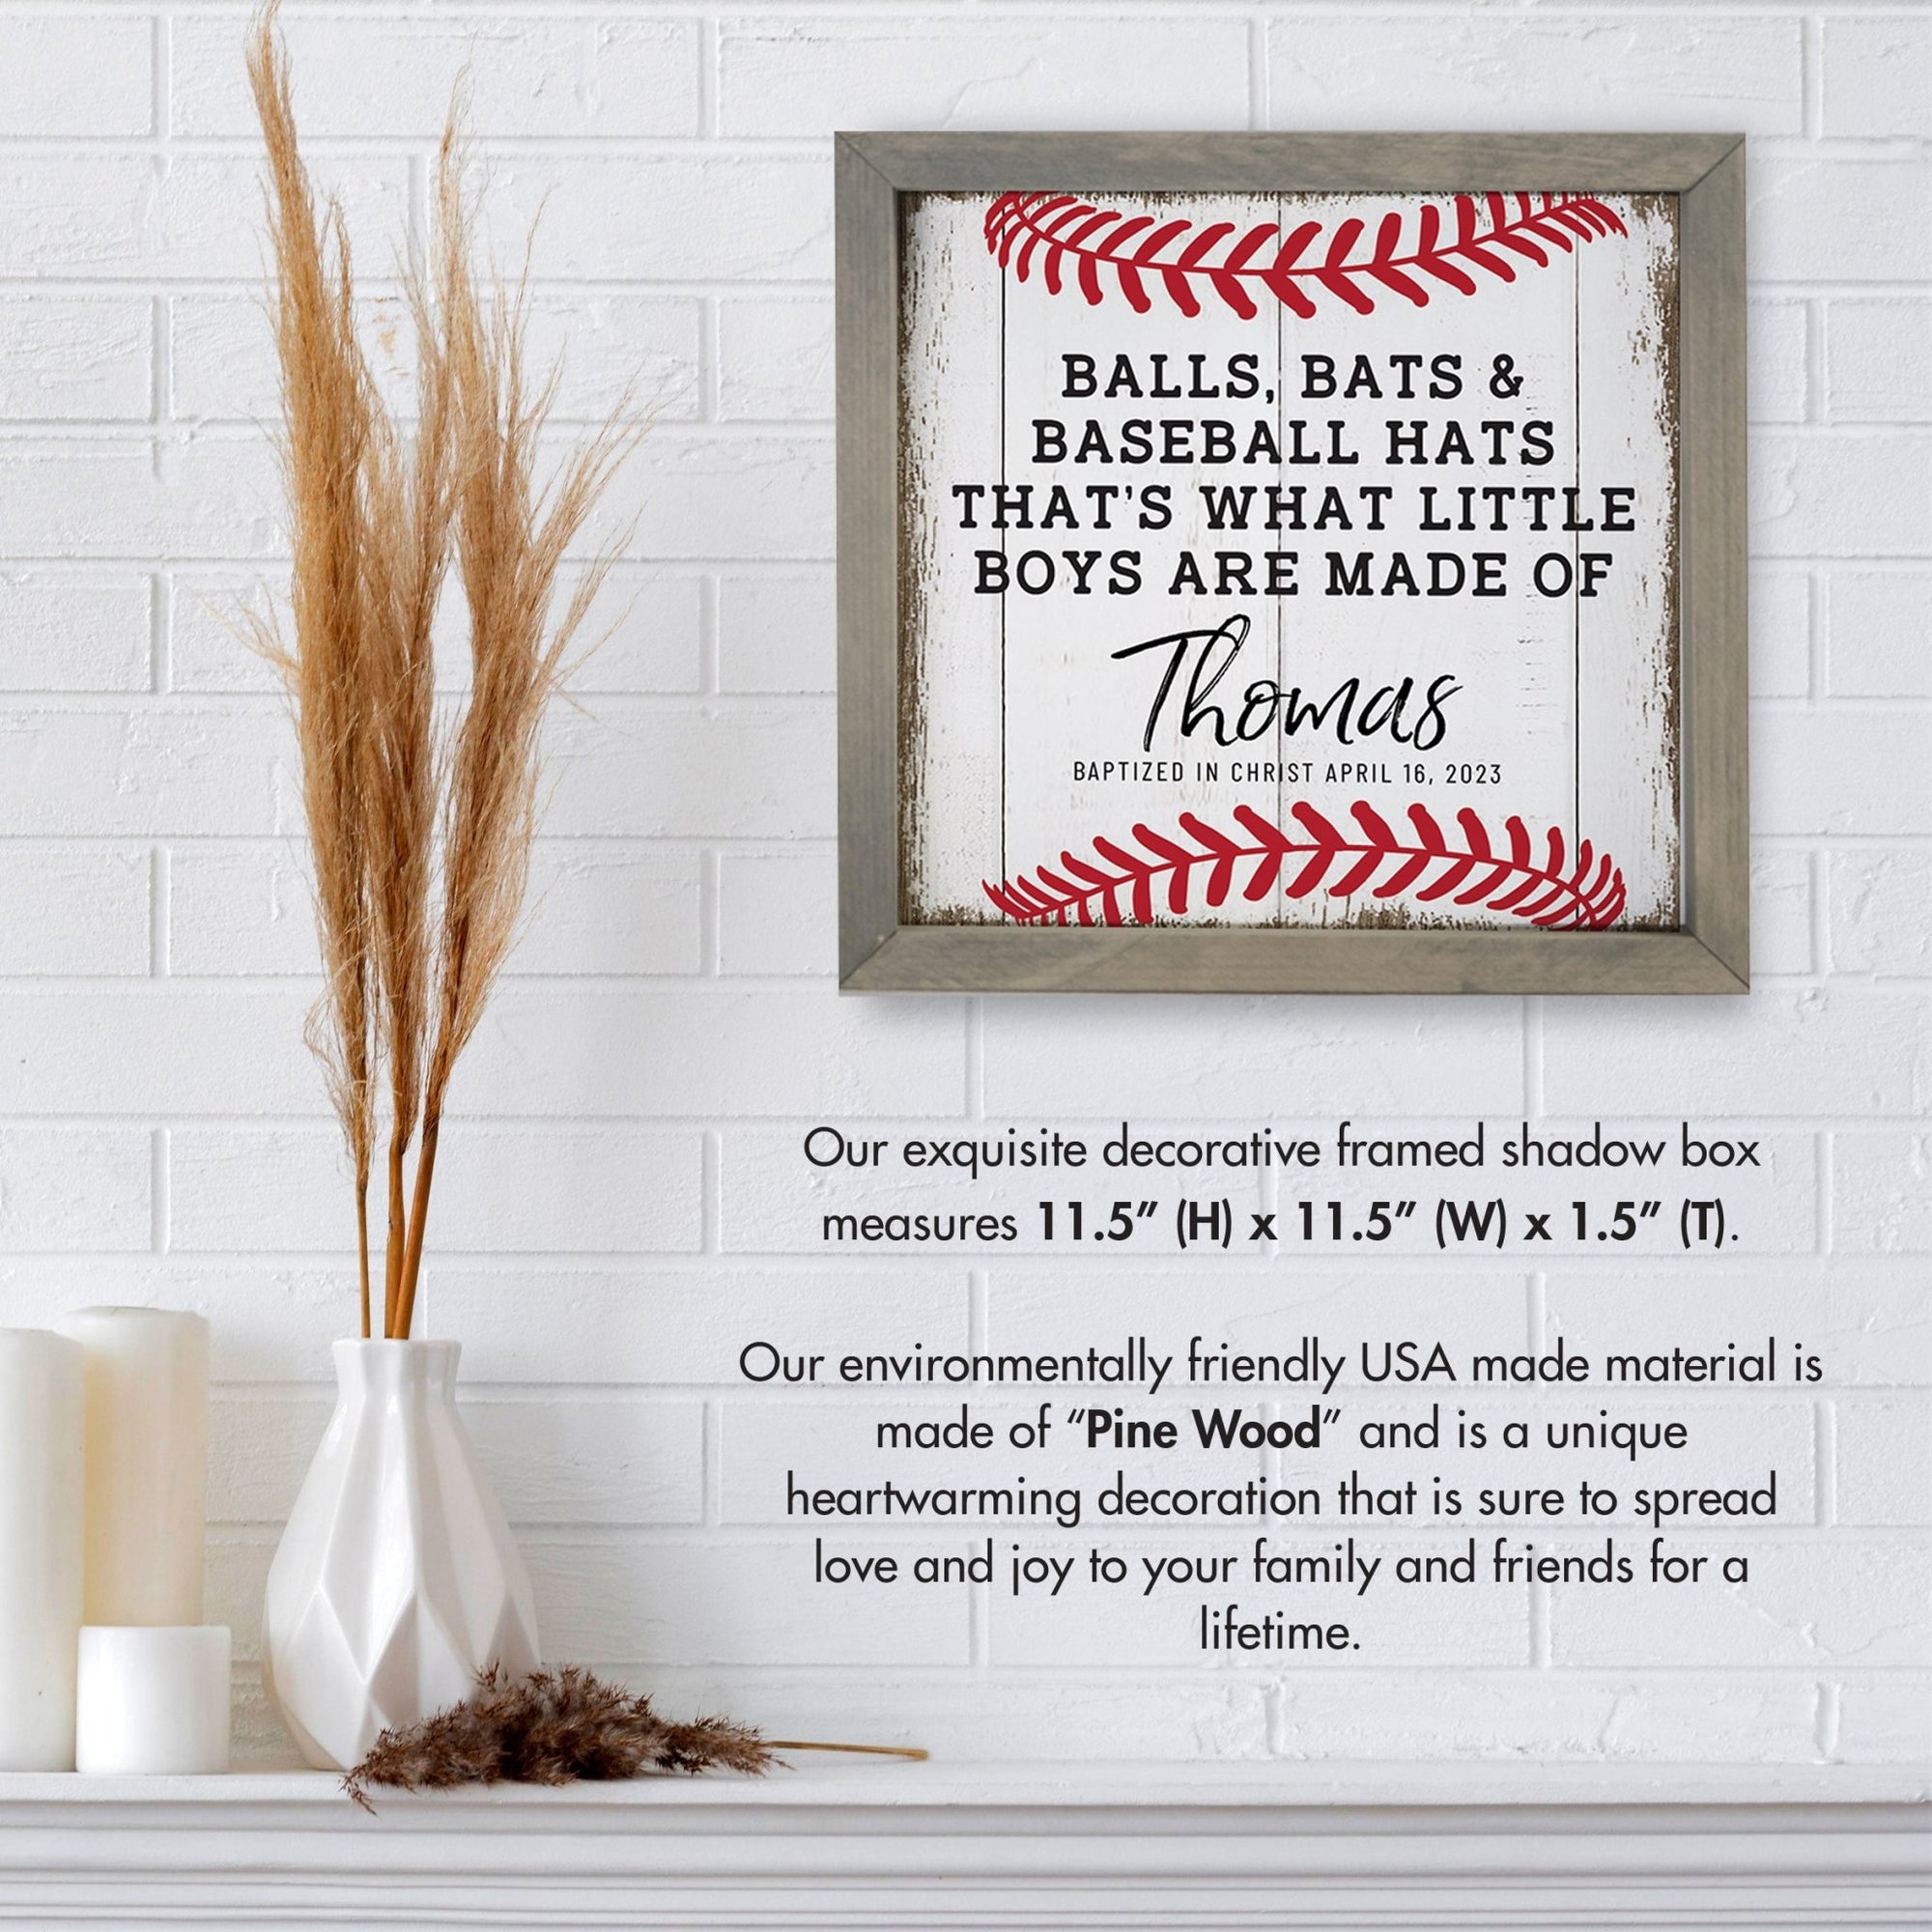 Personalized Elegant Baseball Framed Shadow Box Shelf Décor With Inspiring Bible Verses - Balls. Bats, & Baseball Hats - LifeSong Milestones